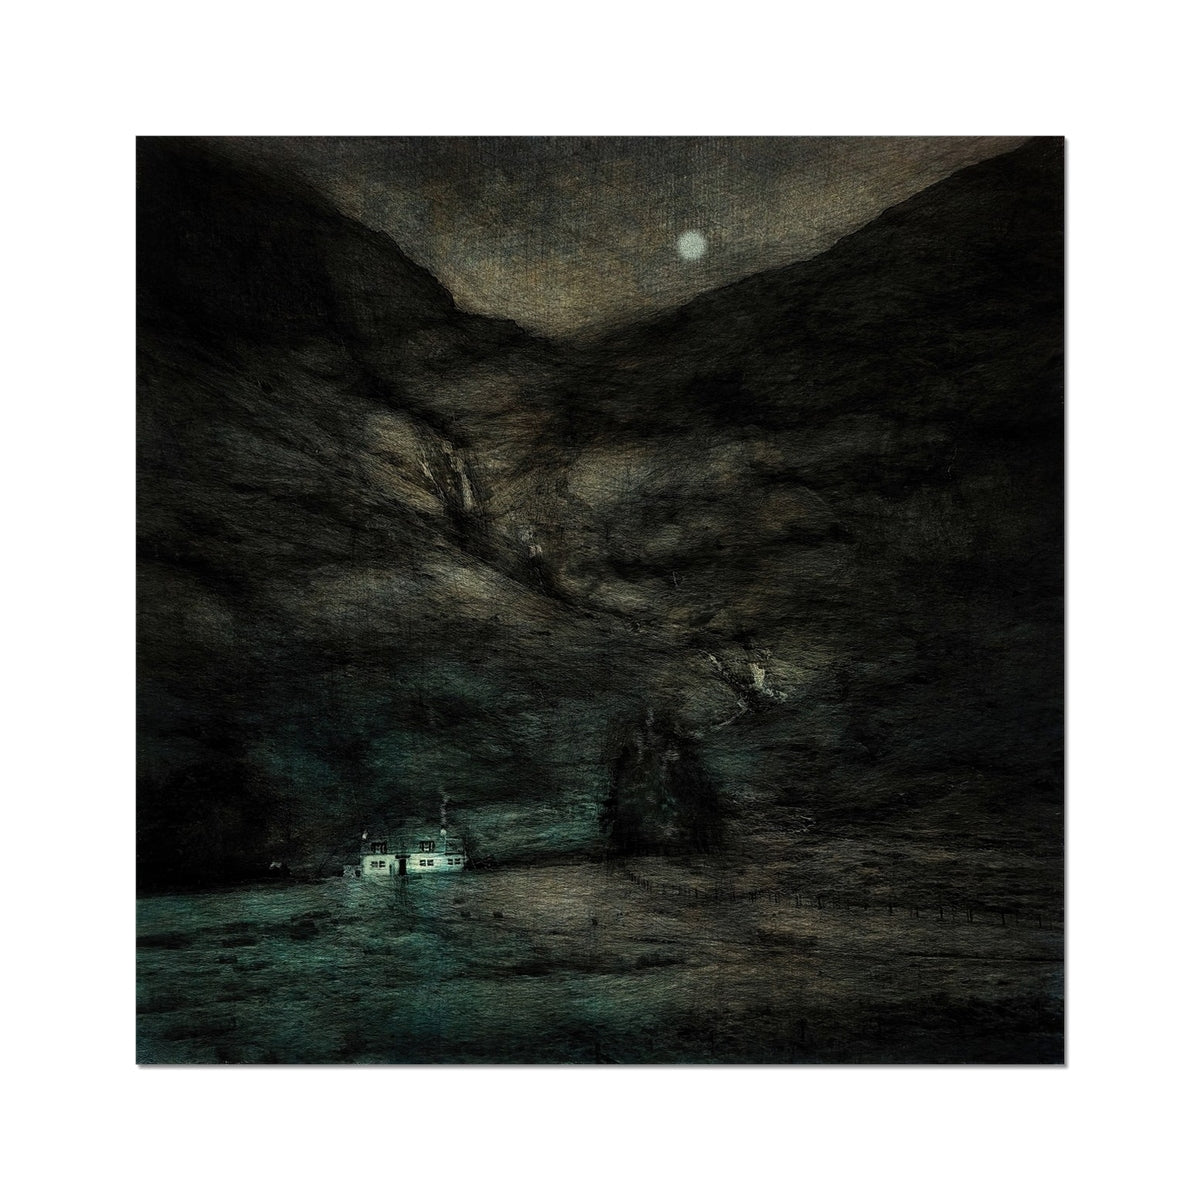 Glencoe Cottage Moonlight Painting | Fine Art Prints From Scotland-Unframed Prints-Glencoe Art Gallery-24"x24"-Paintings, Prints, Homeware, Art Gifts From Scotland By Scottish Artist Kevin Hunter